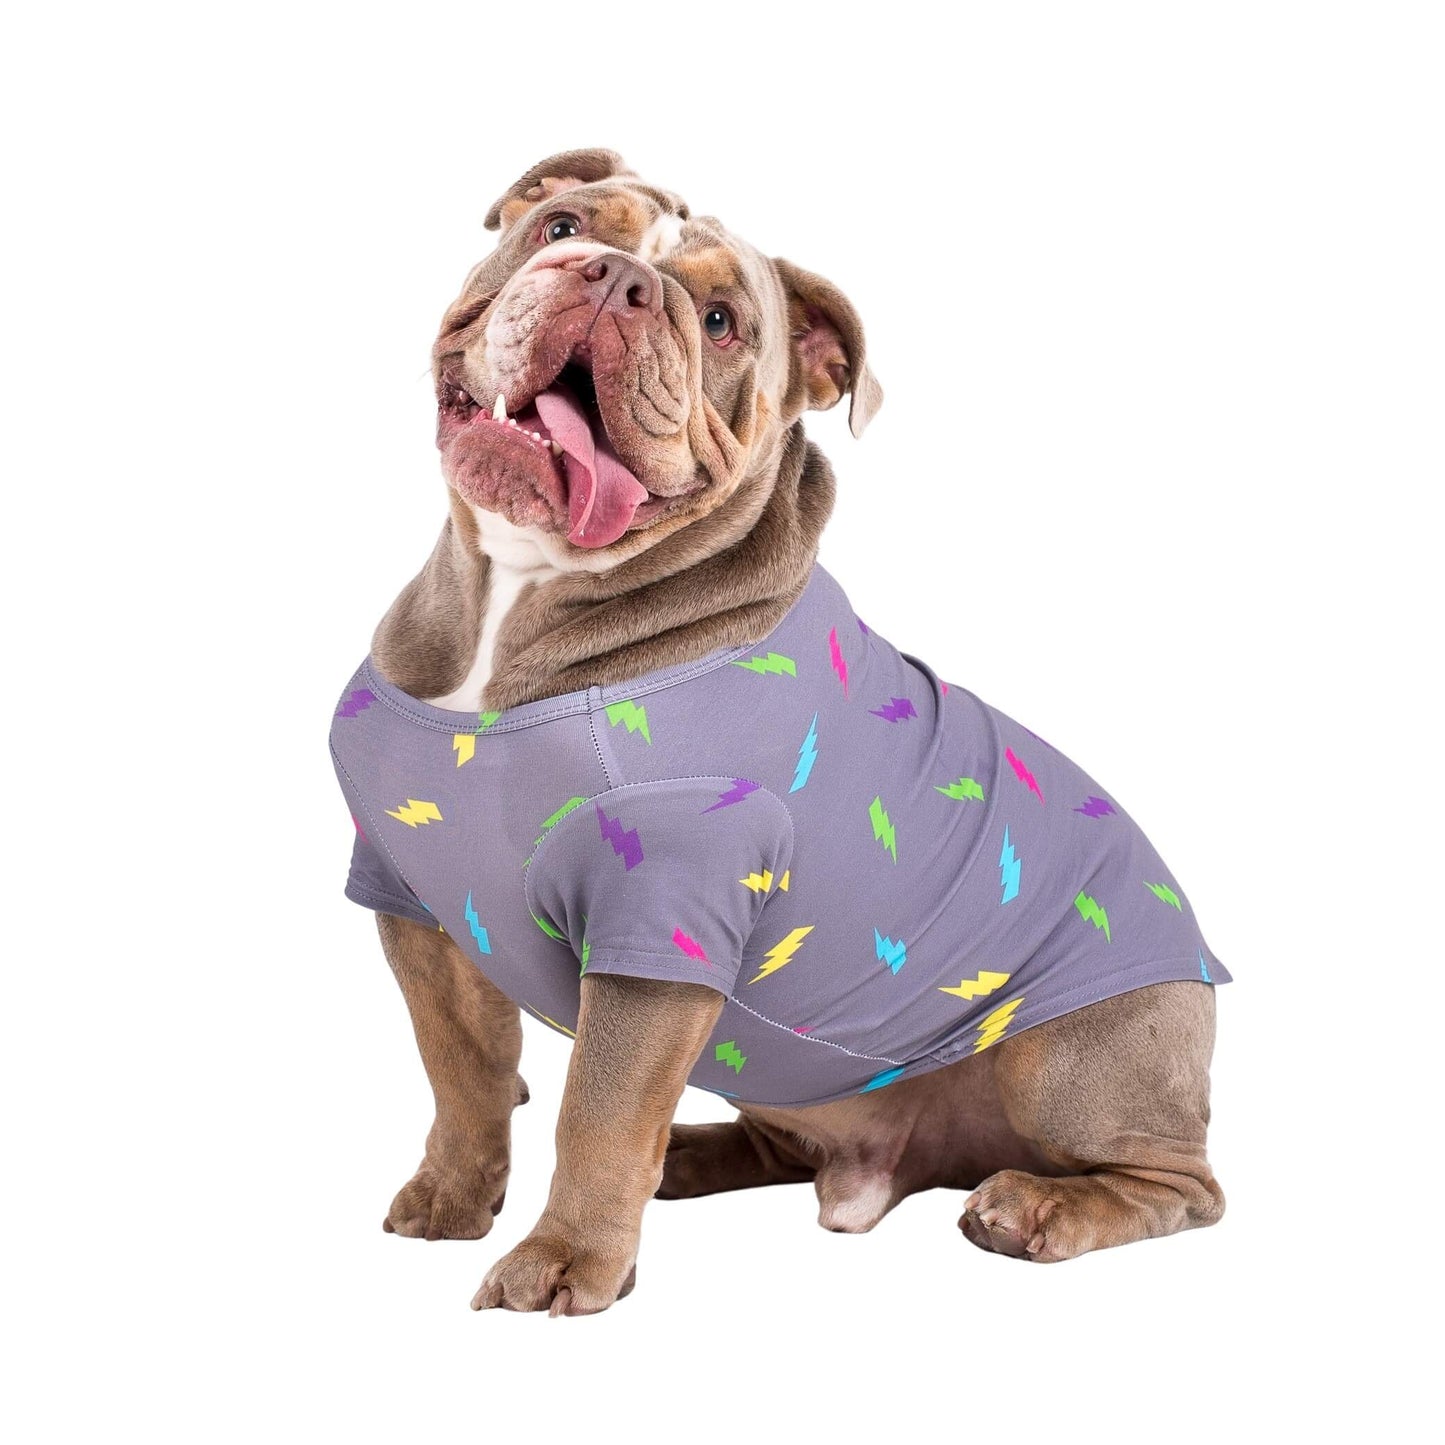 English Bulldog wearing Electric Energy dog shirt